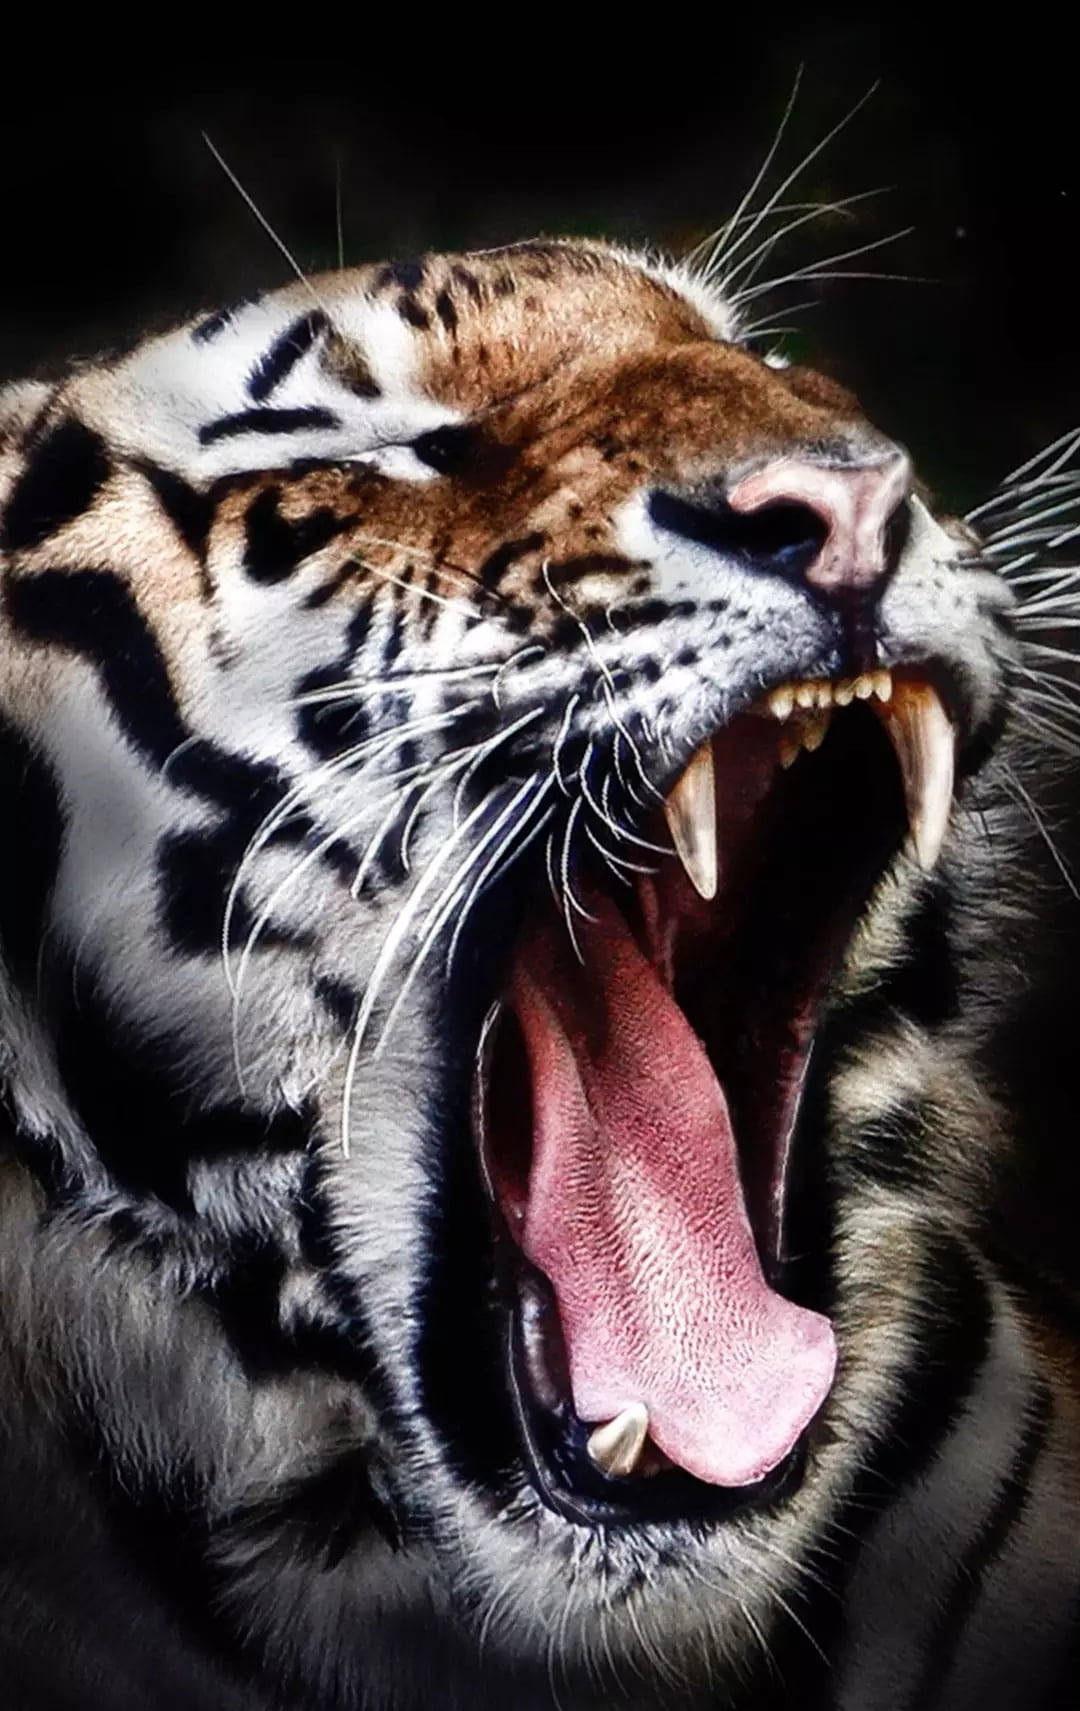 An Angry Roaring Black Tiger Wallpaper